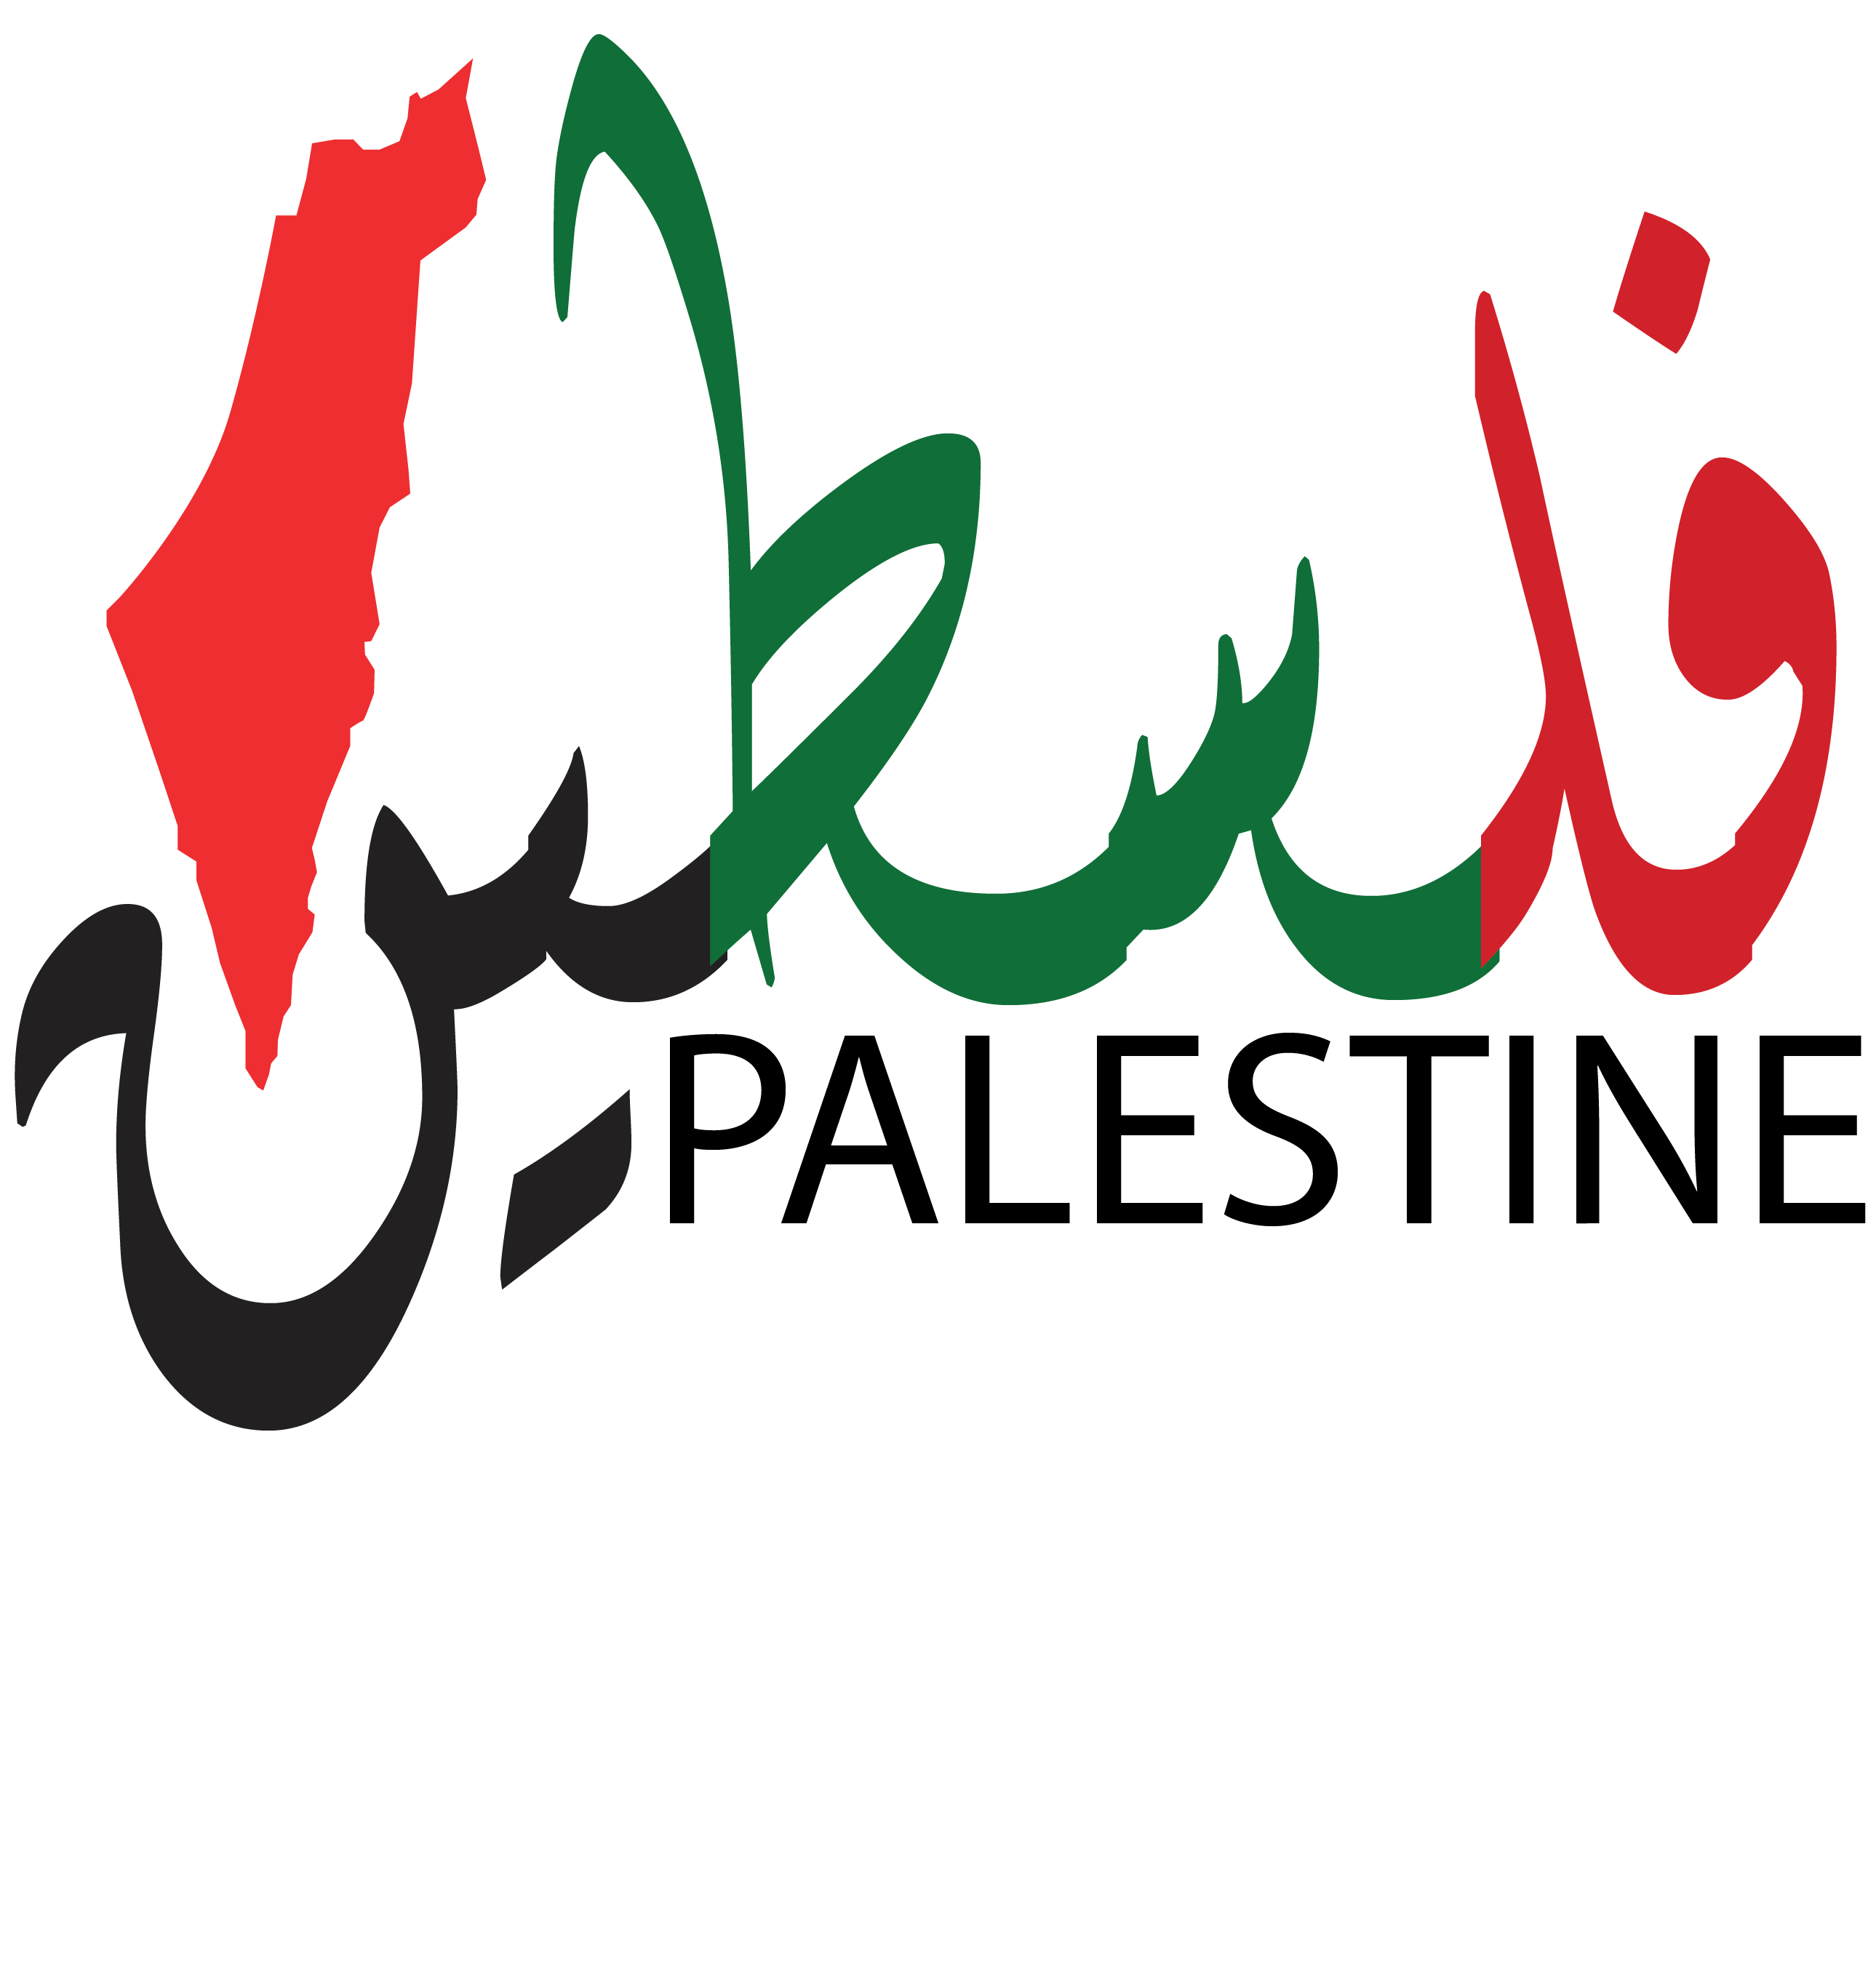 Palestine logo work with map - AnyTask.com